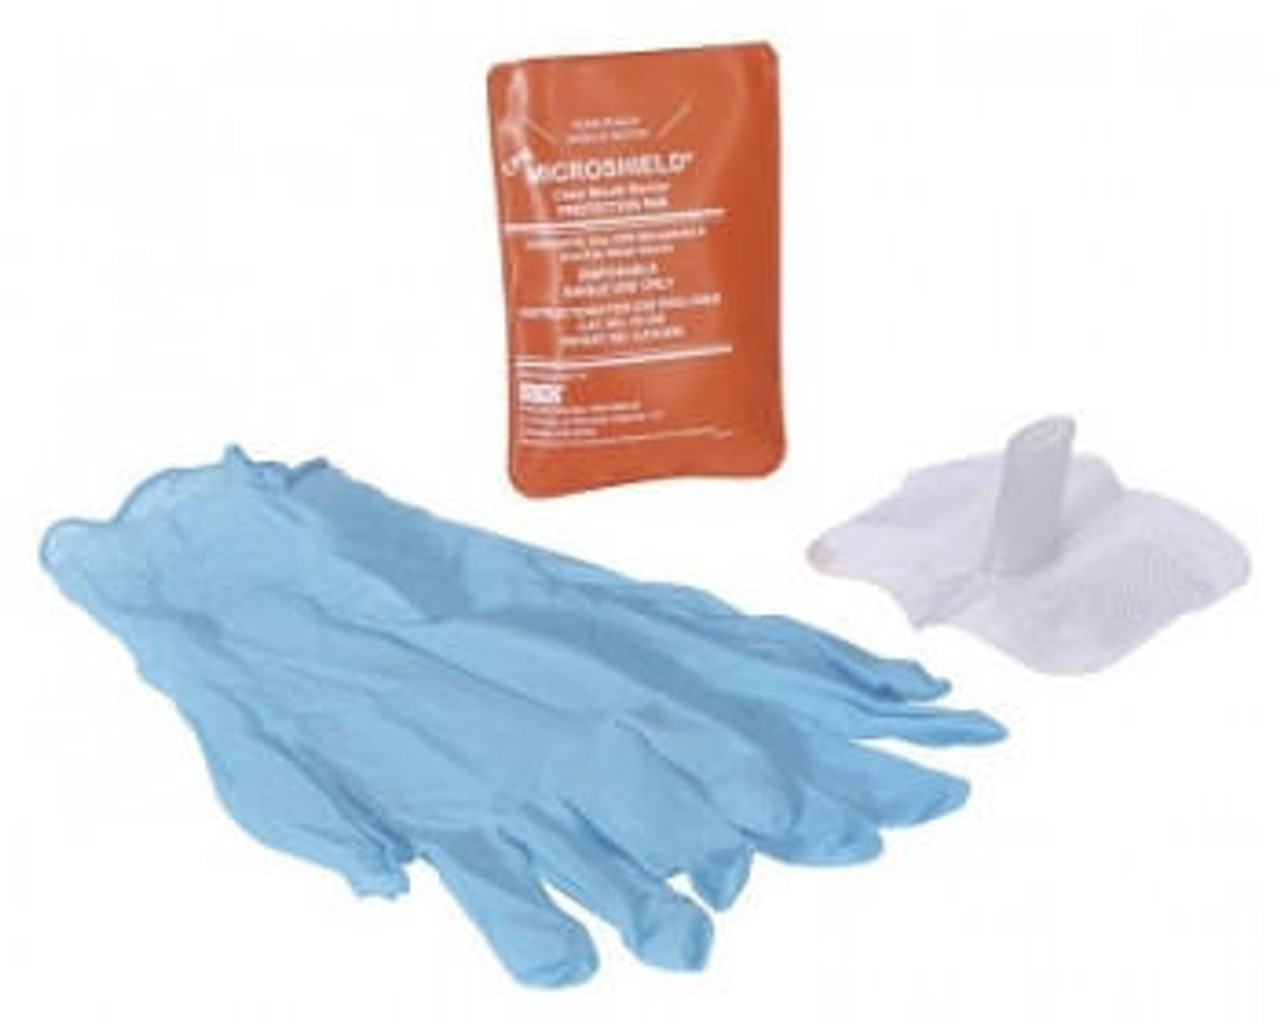 Carelinc 4270160 CPR Microshield - W/1 Pr Nitrile Glove In Orange Pouch